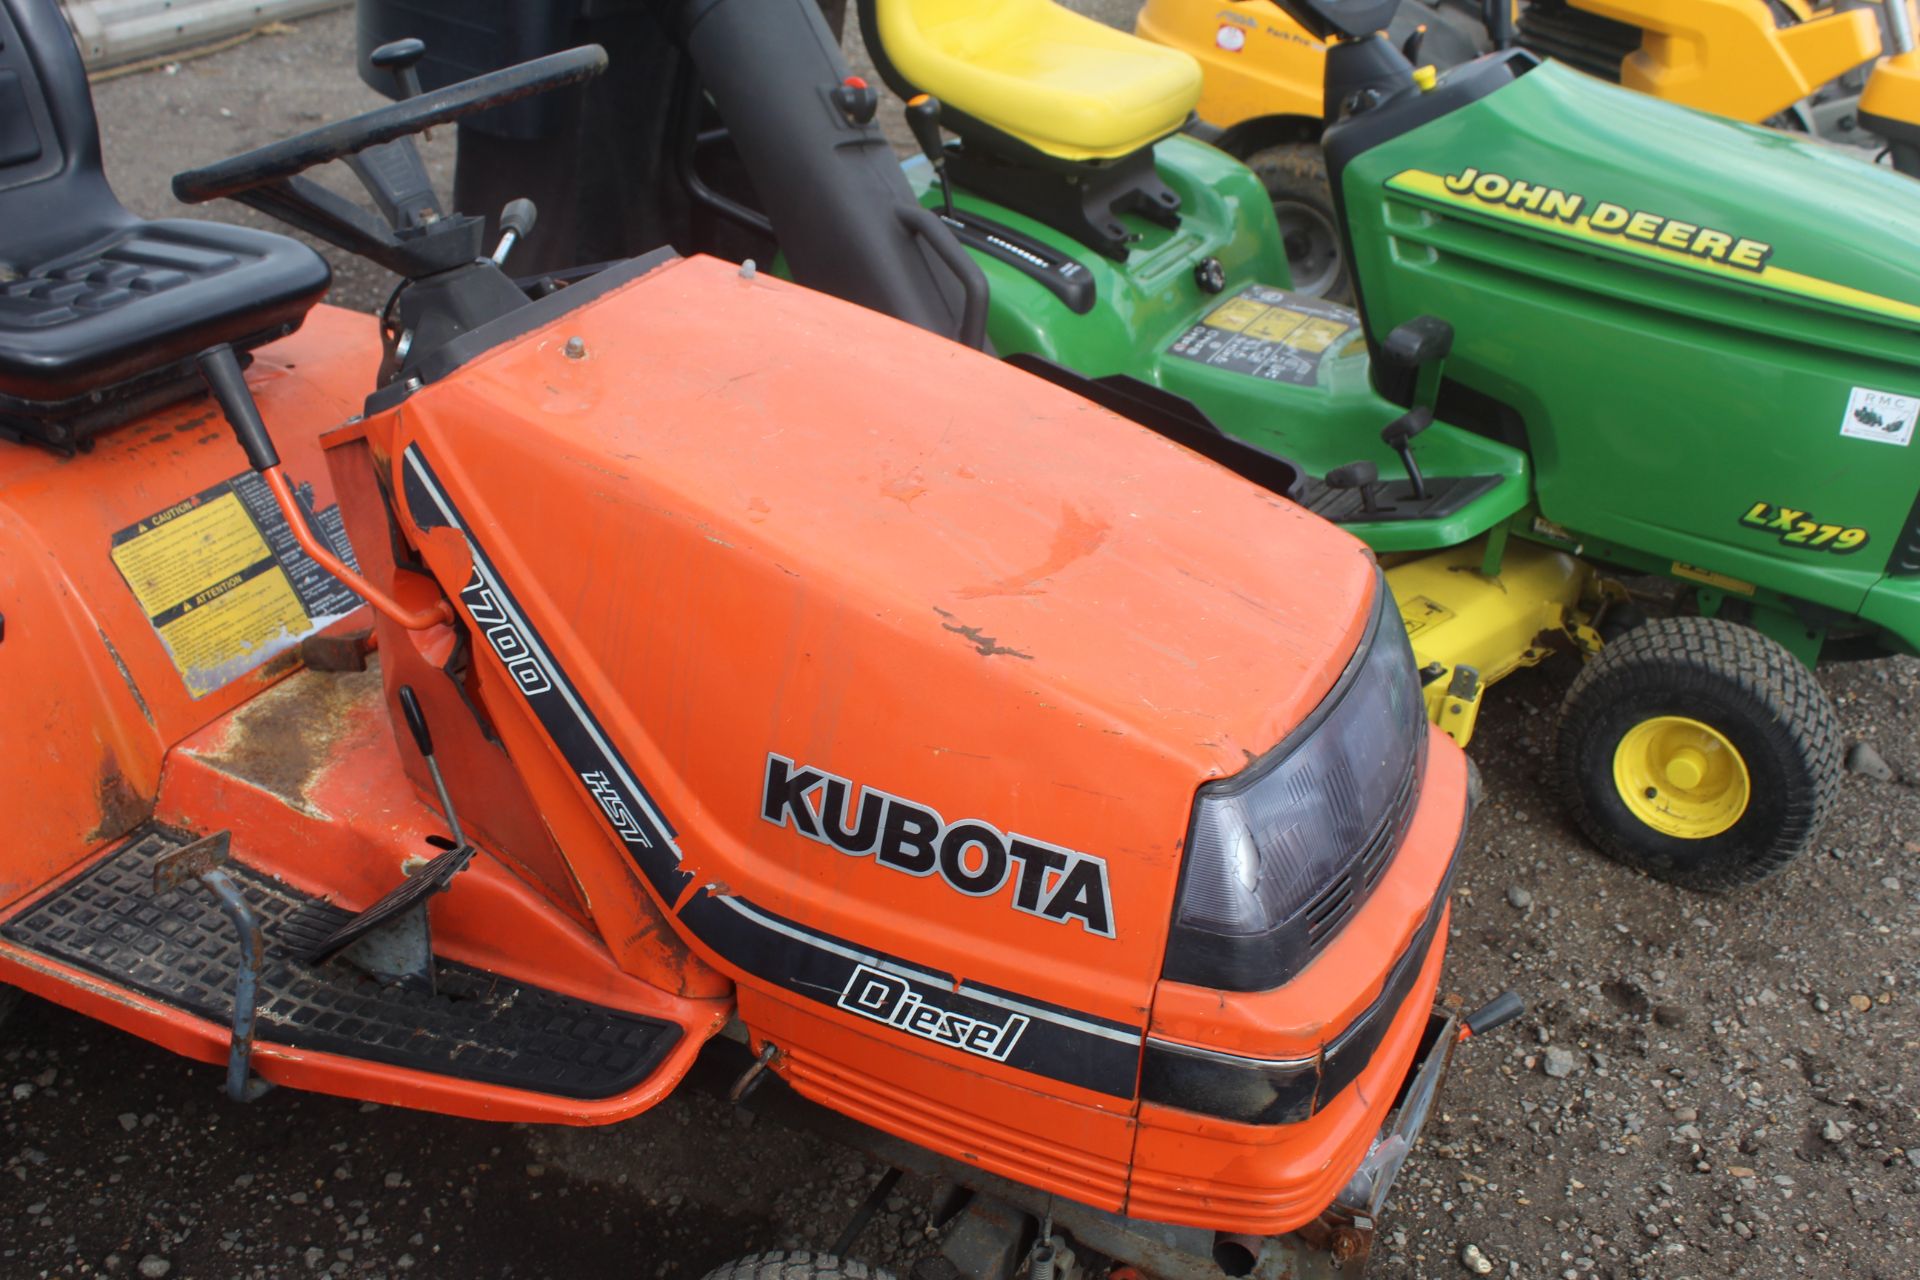 Kubota G1600 diesel hydrostatic garden tractor. Key held. - Image 10 of 20